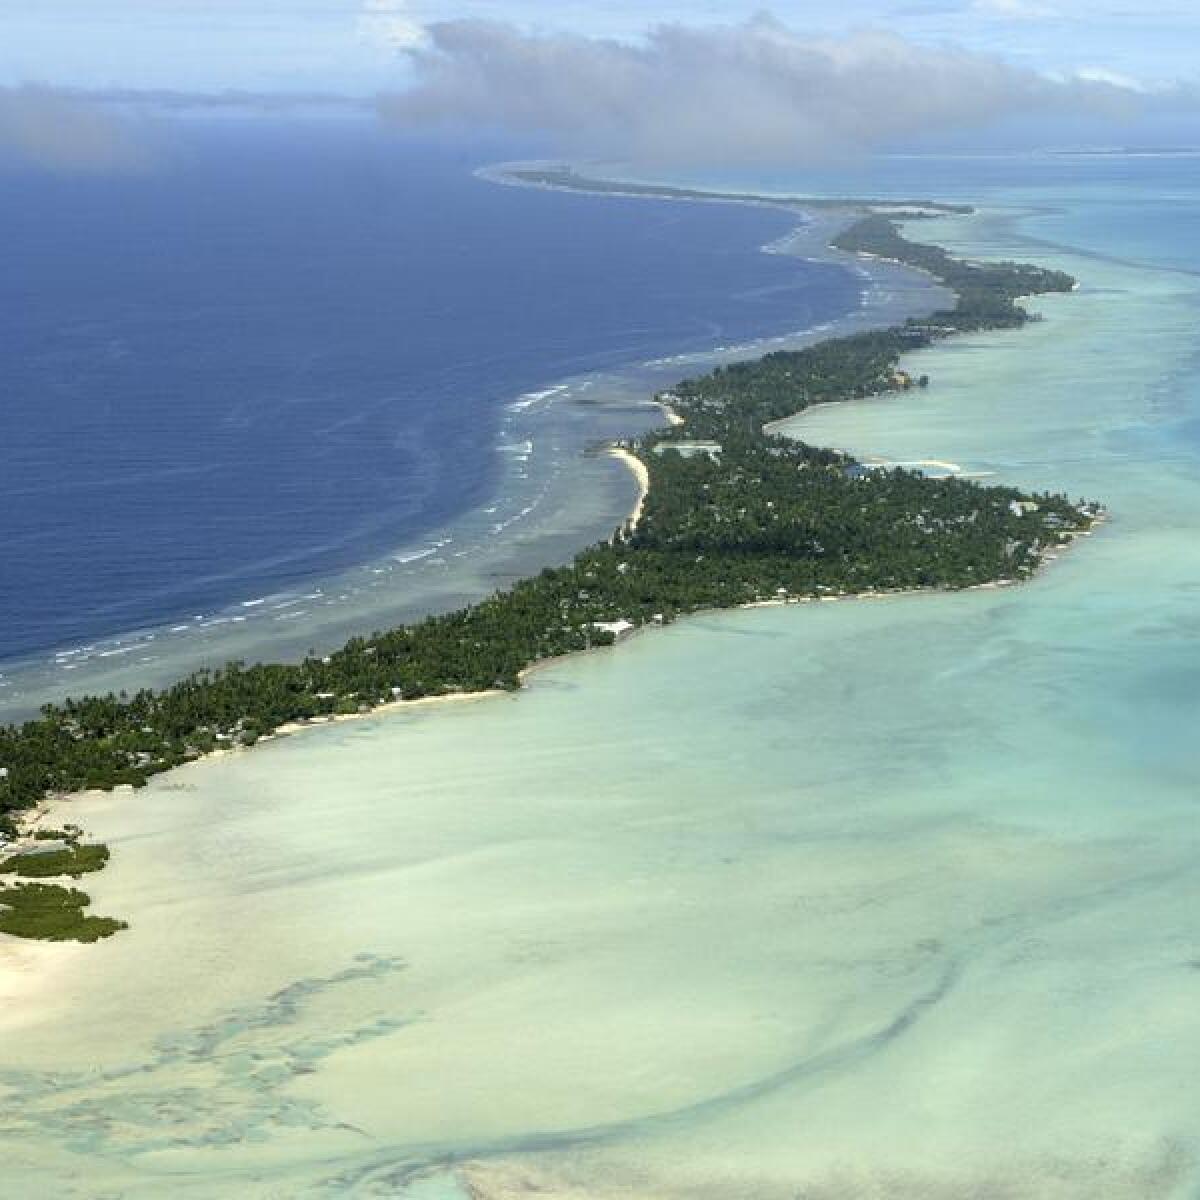 Aerial view of Taraw atoll, Kiribati.